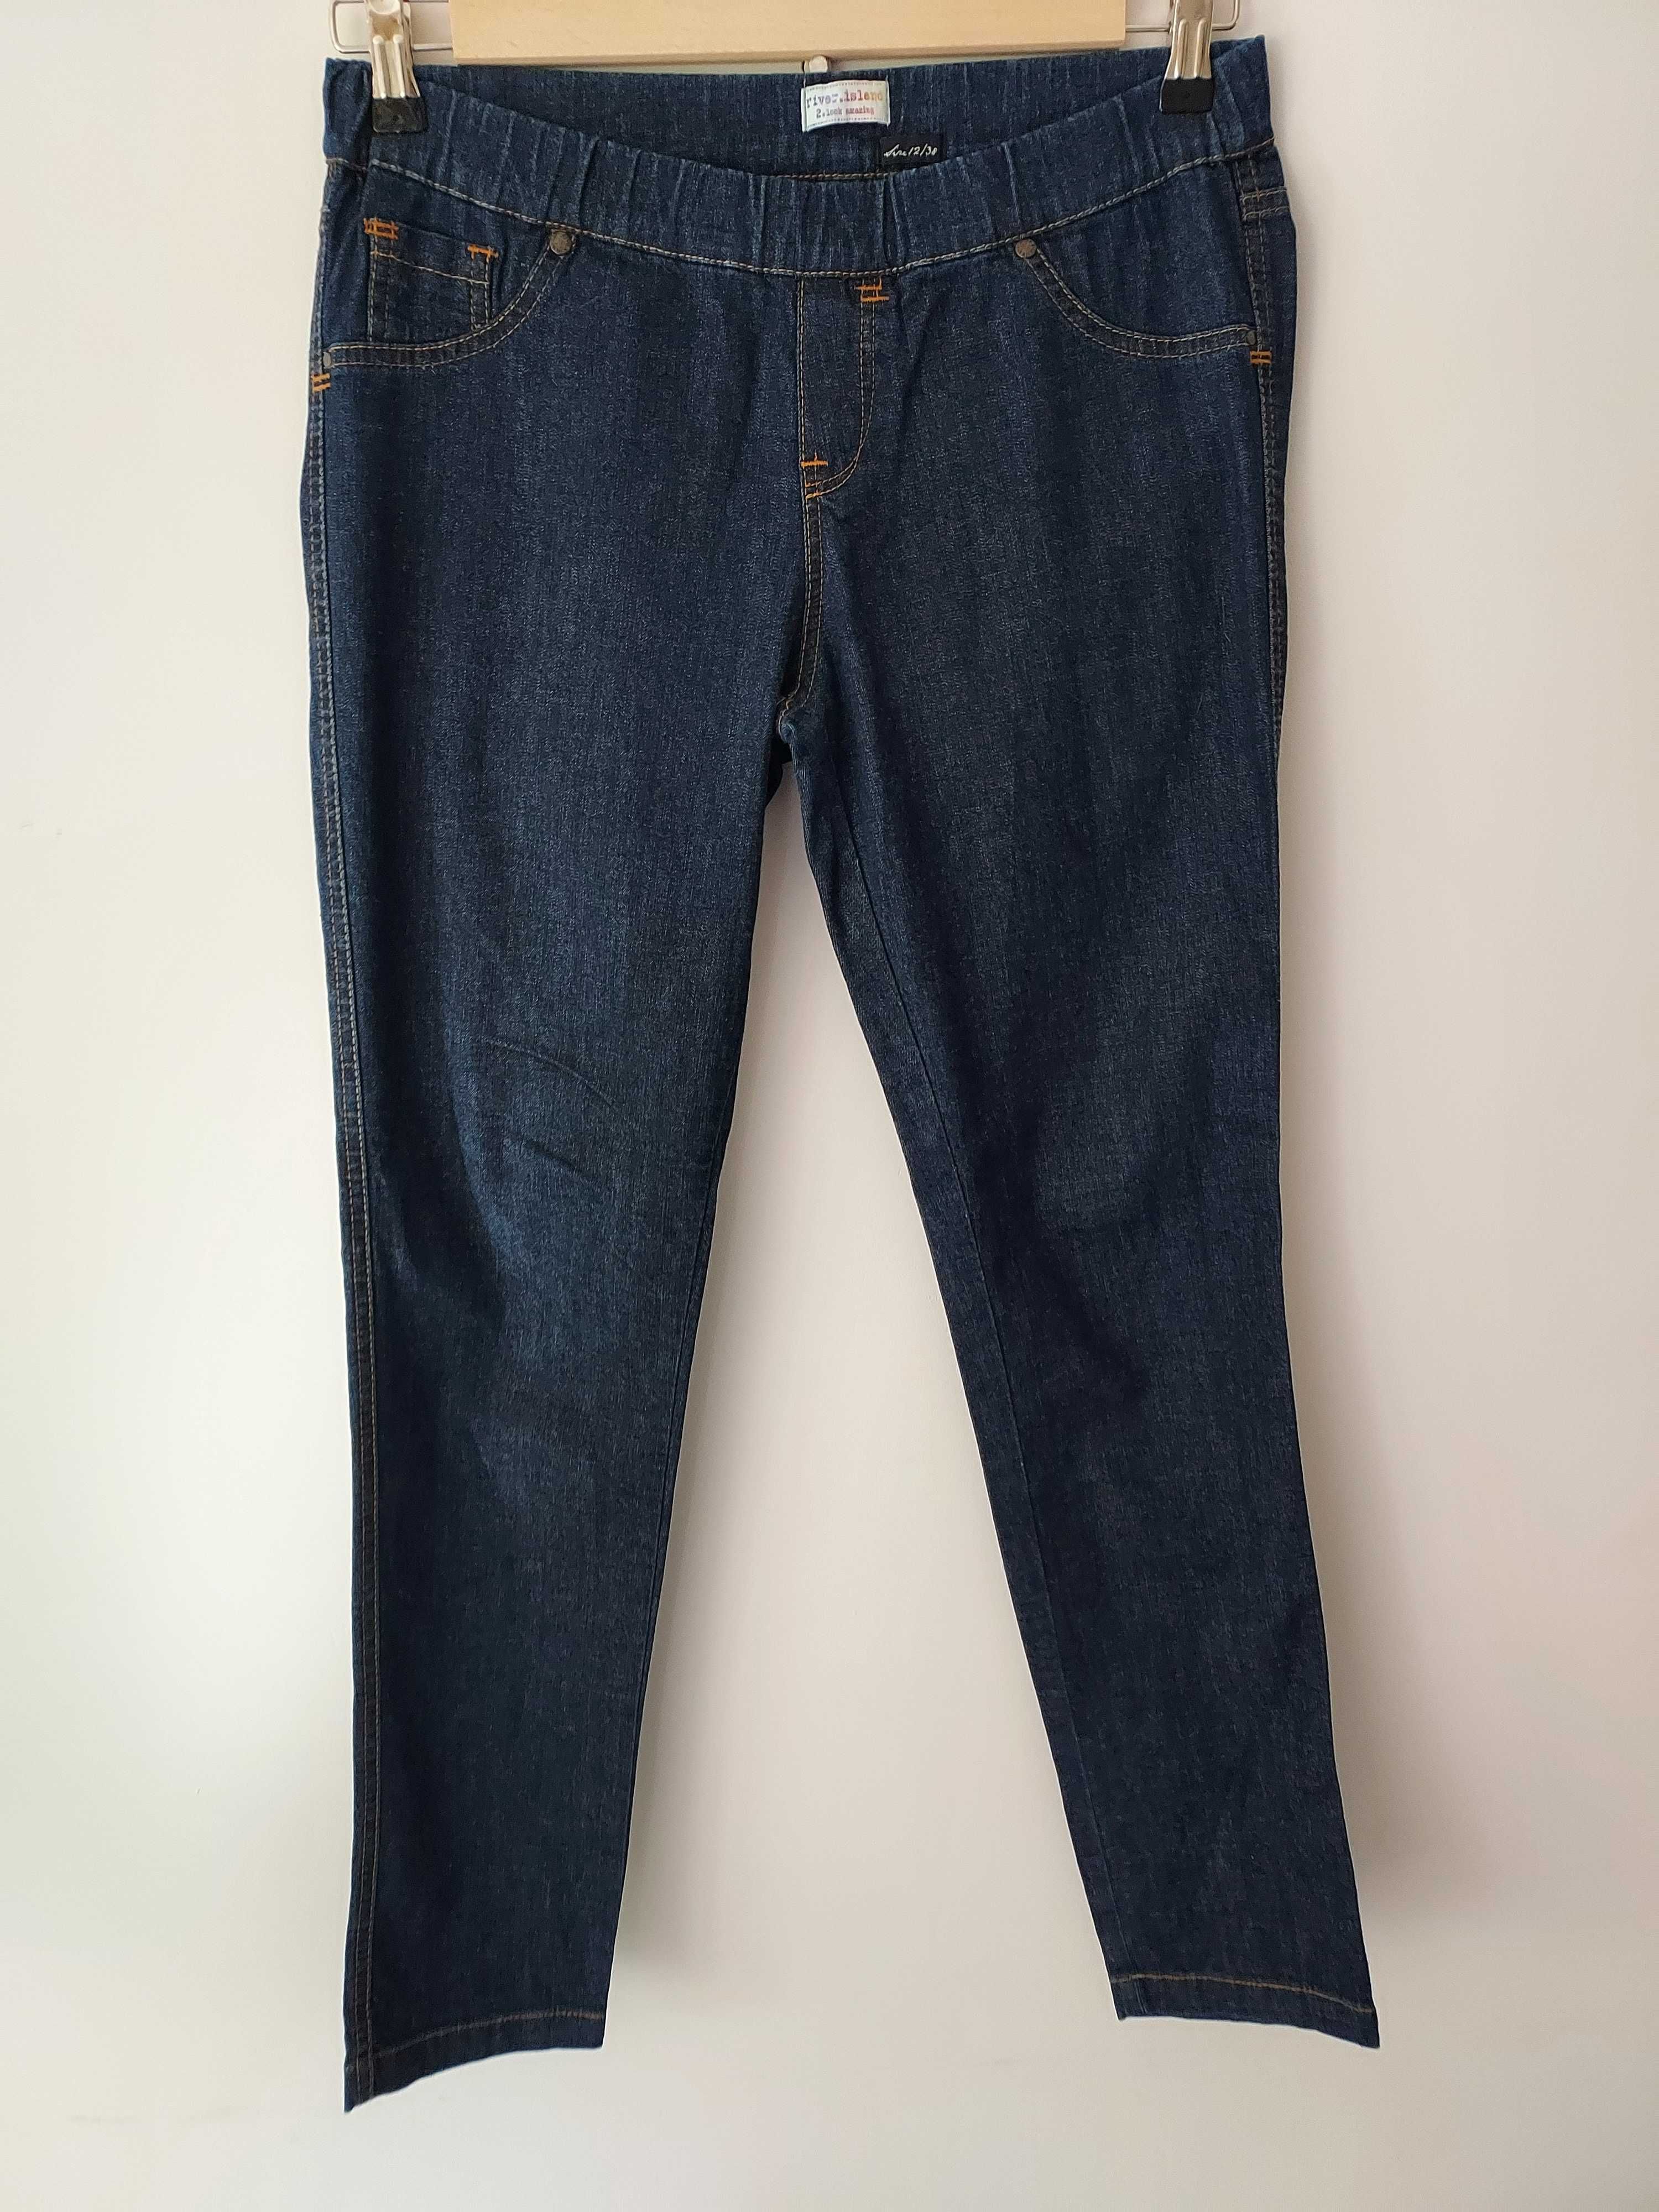 River Islamd spodnie jeansy 38/40